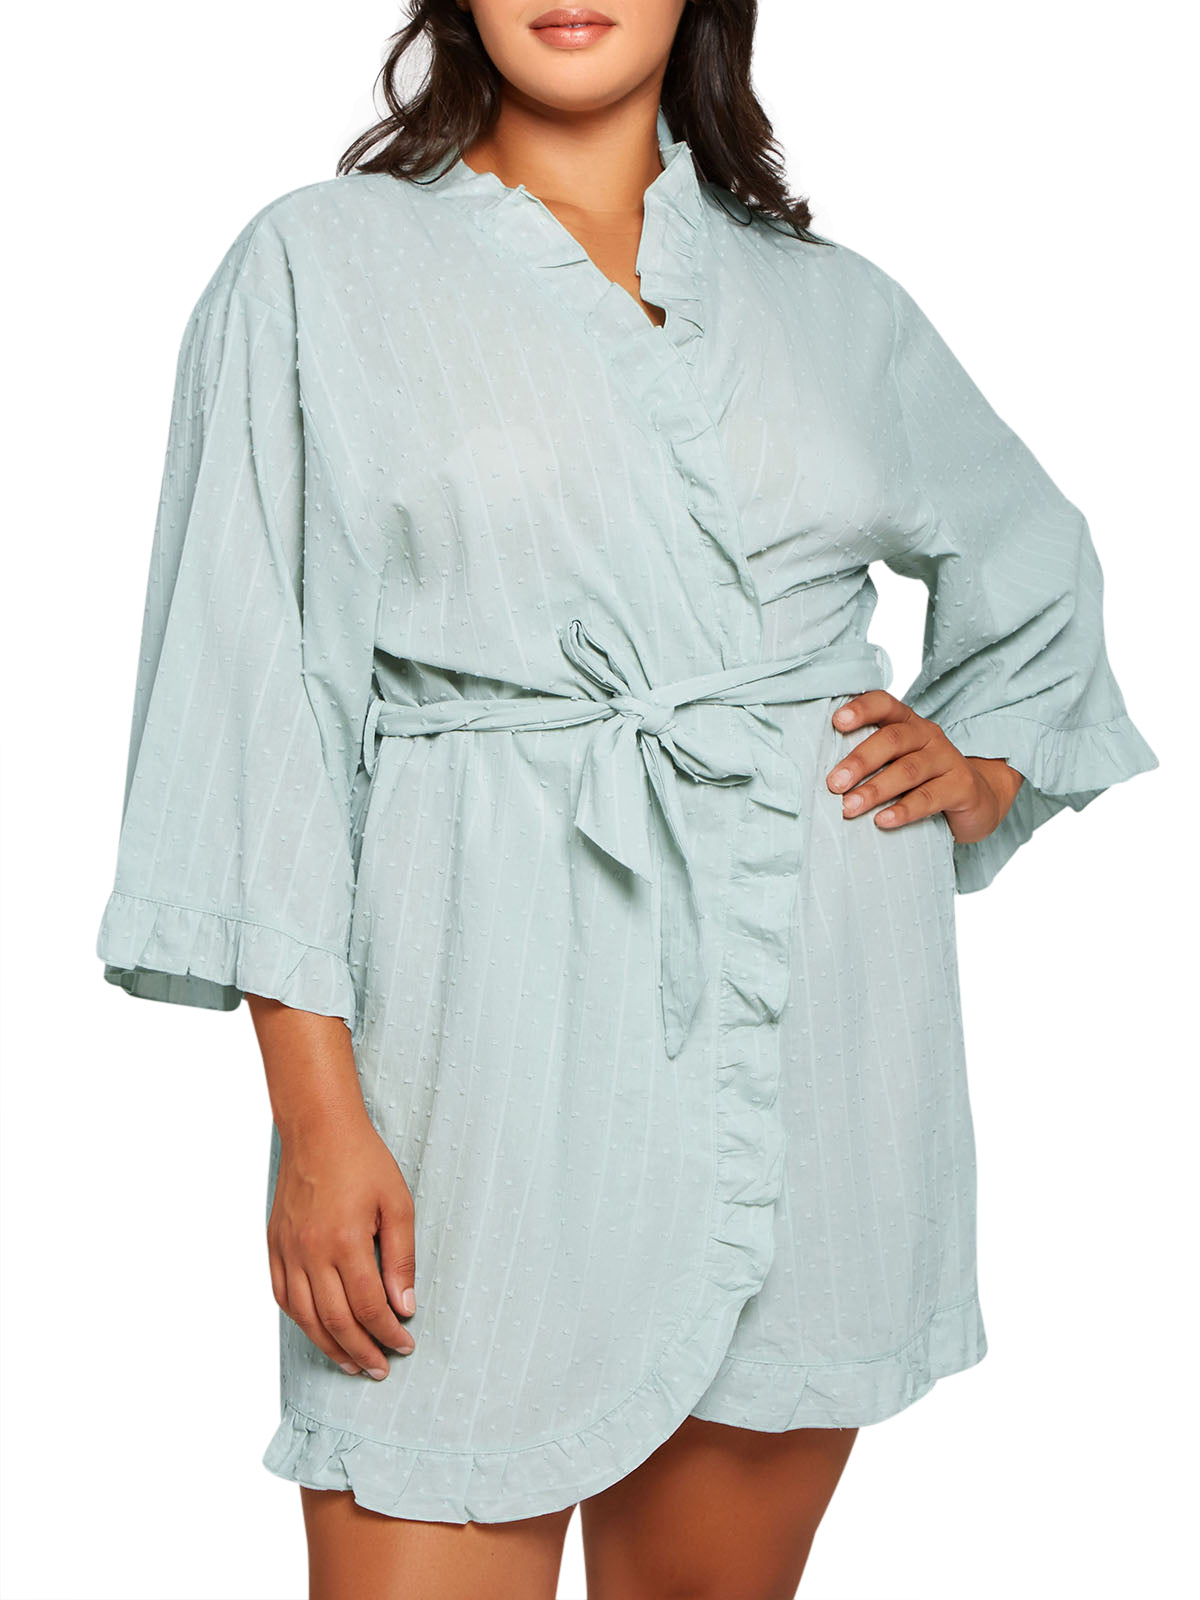 iCollection Plus Size Sleepwear Claire Plus Size Robe